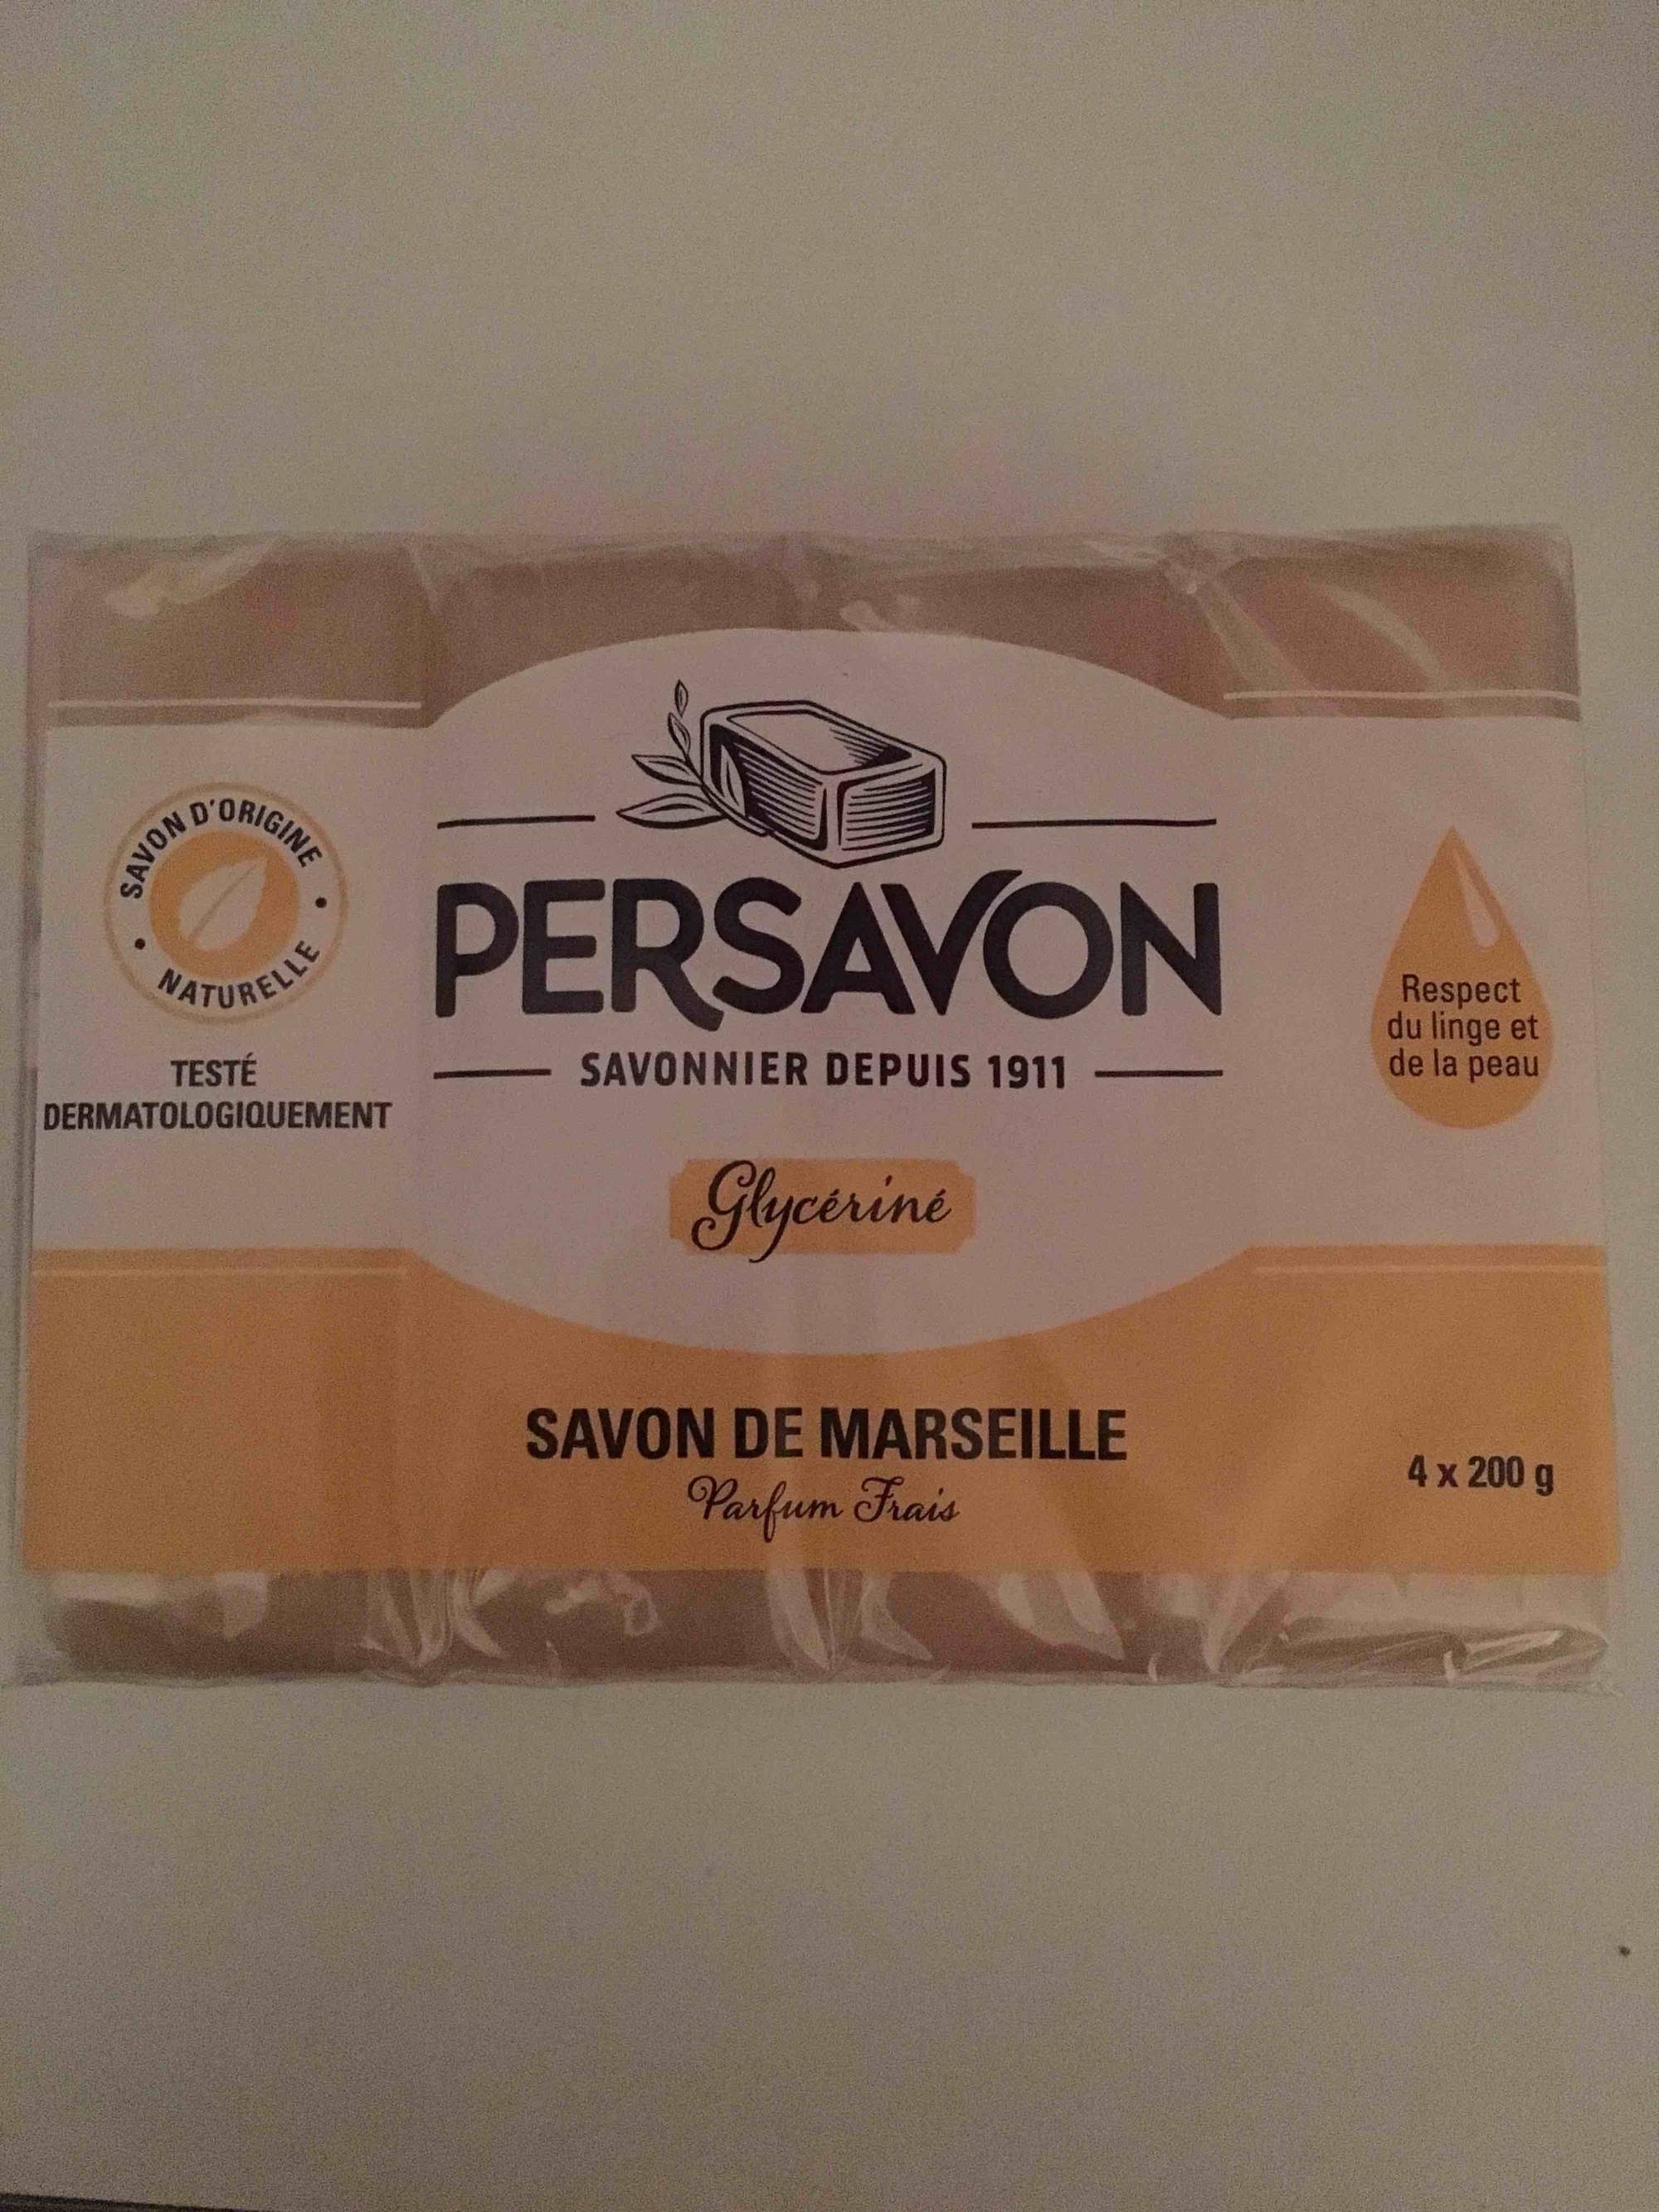 PERSAVON - Savon de Marseille glycériné parfum frais